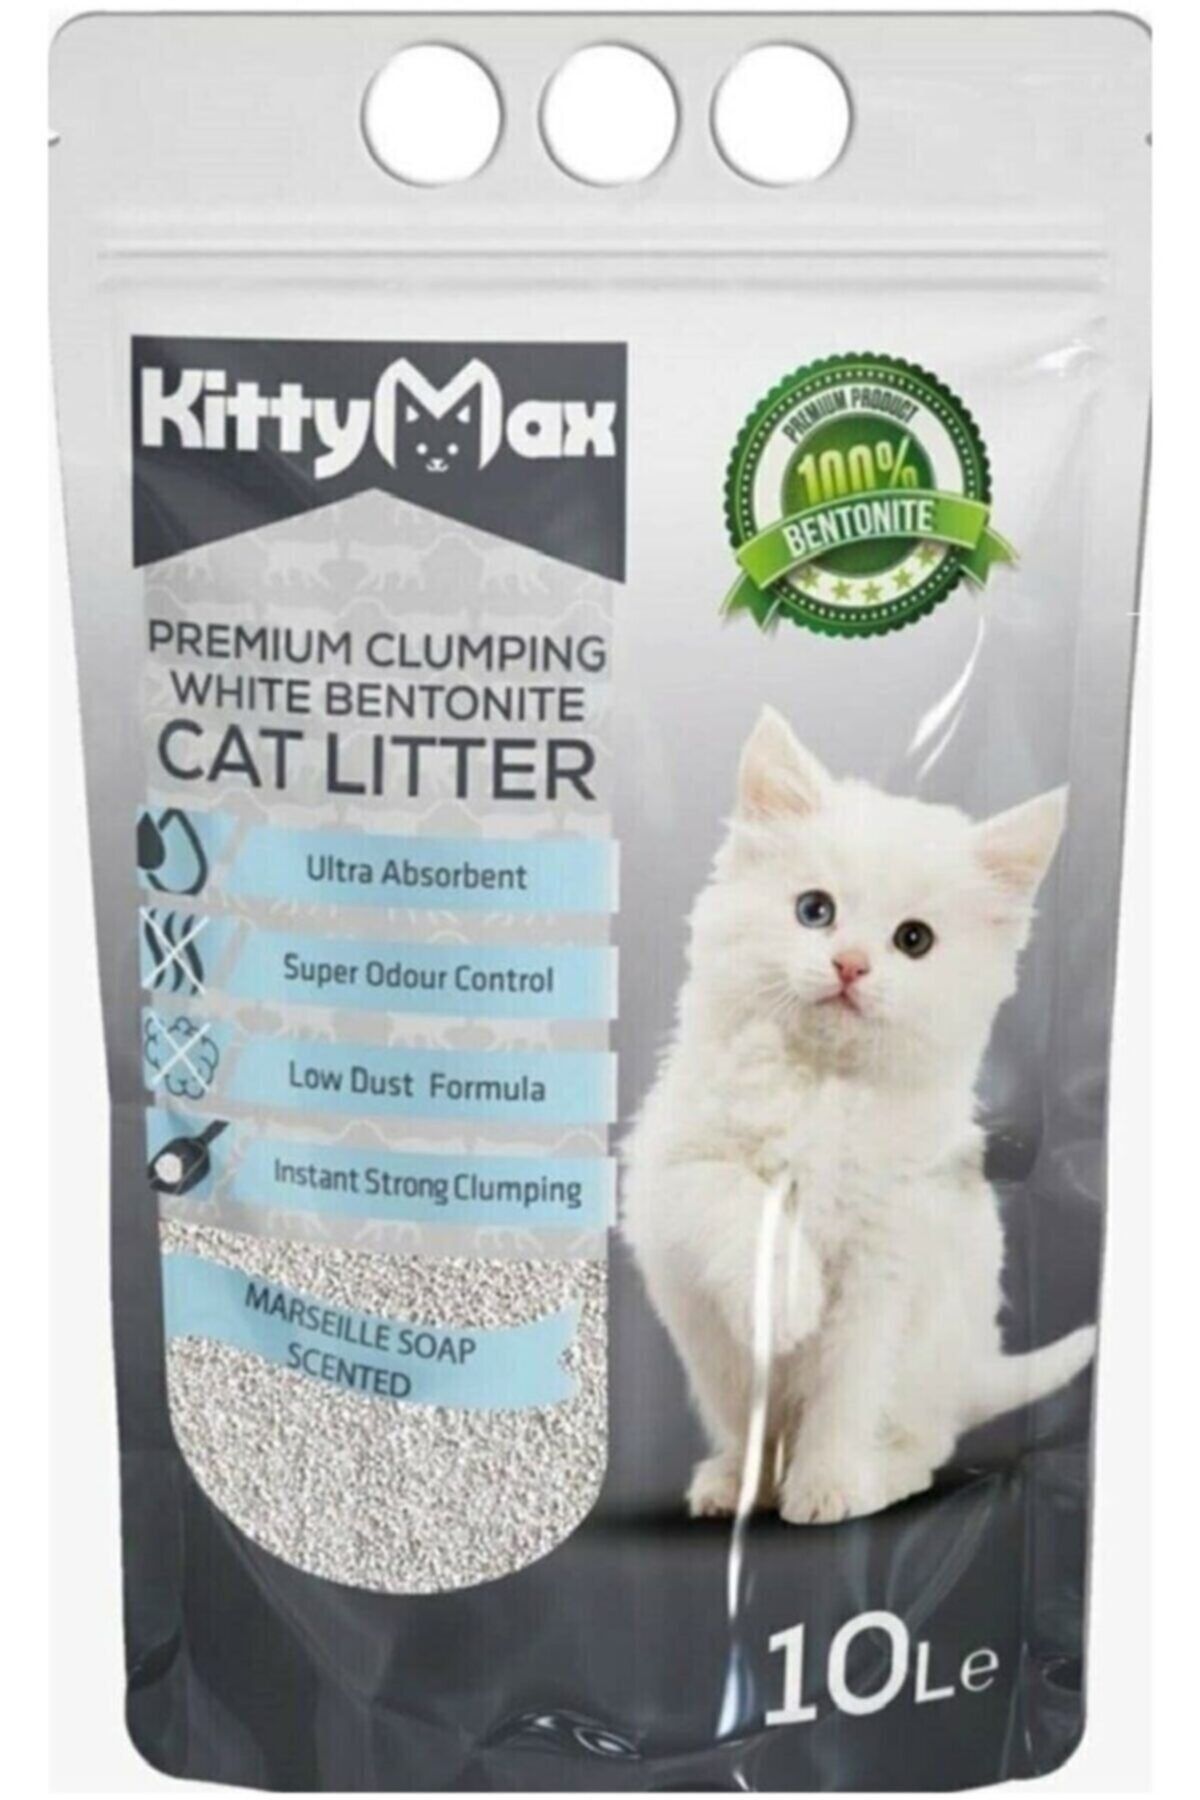 Kittymax Kitty Max Marsilya Sabunu Kokulu Bentonit Kedi Kumu 10lt Kalın Taneli